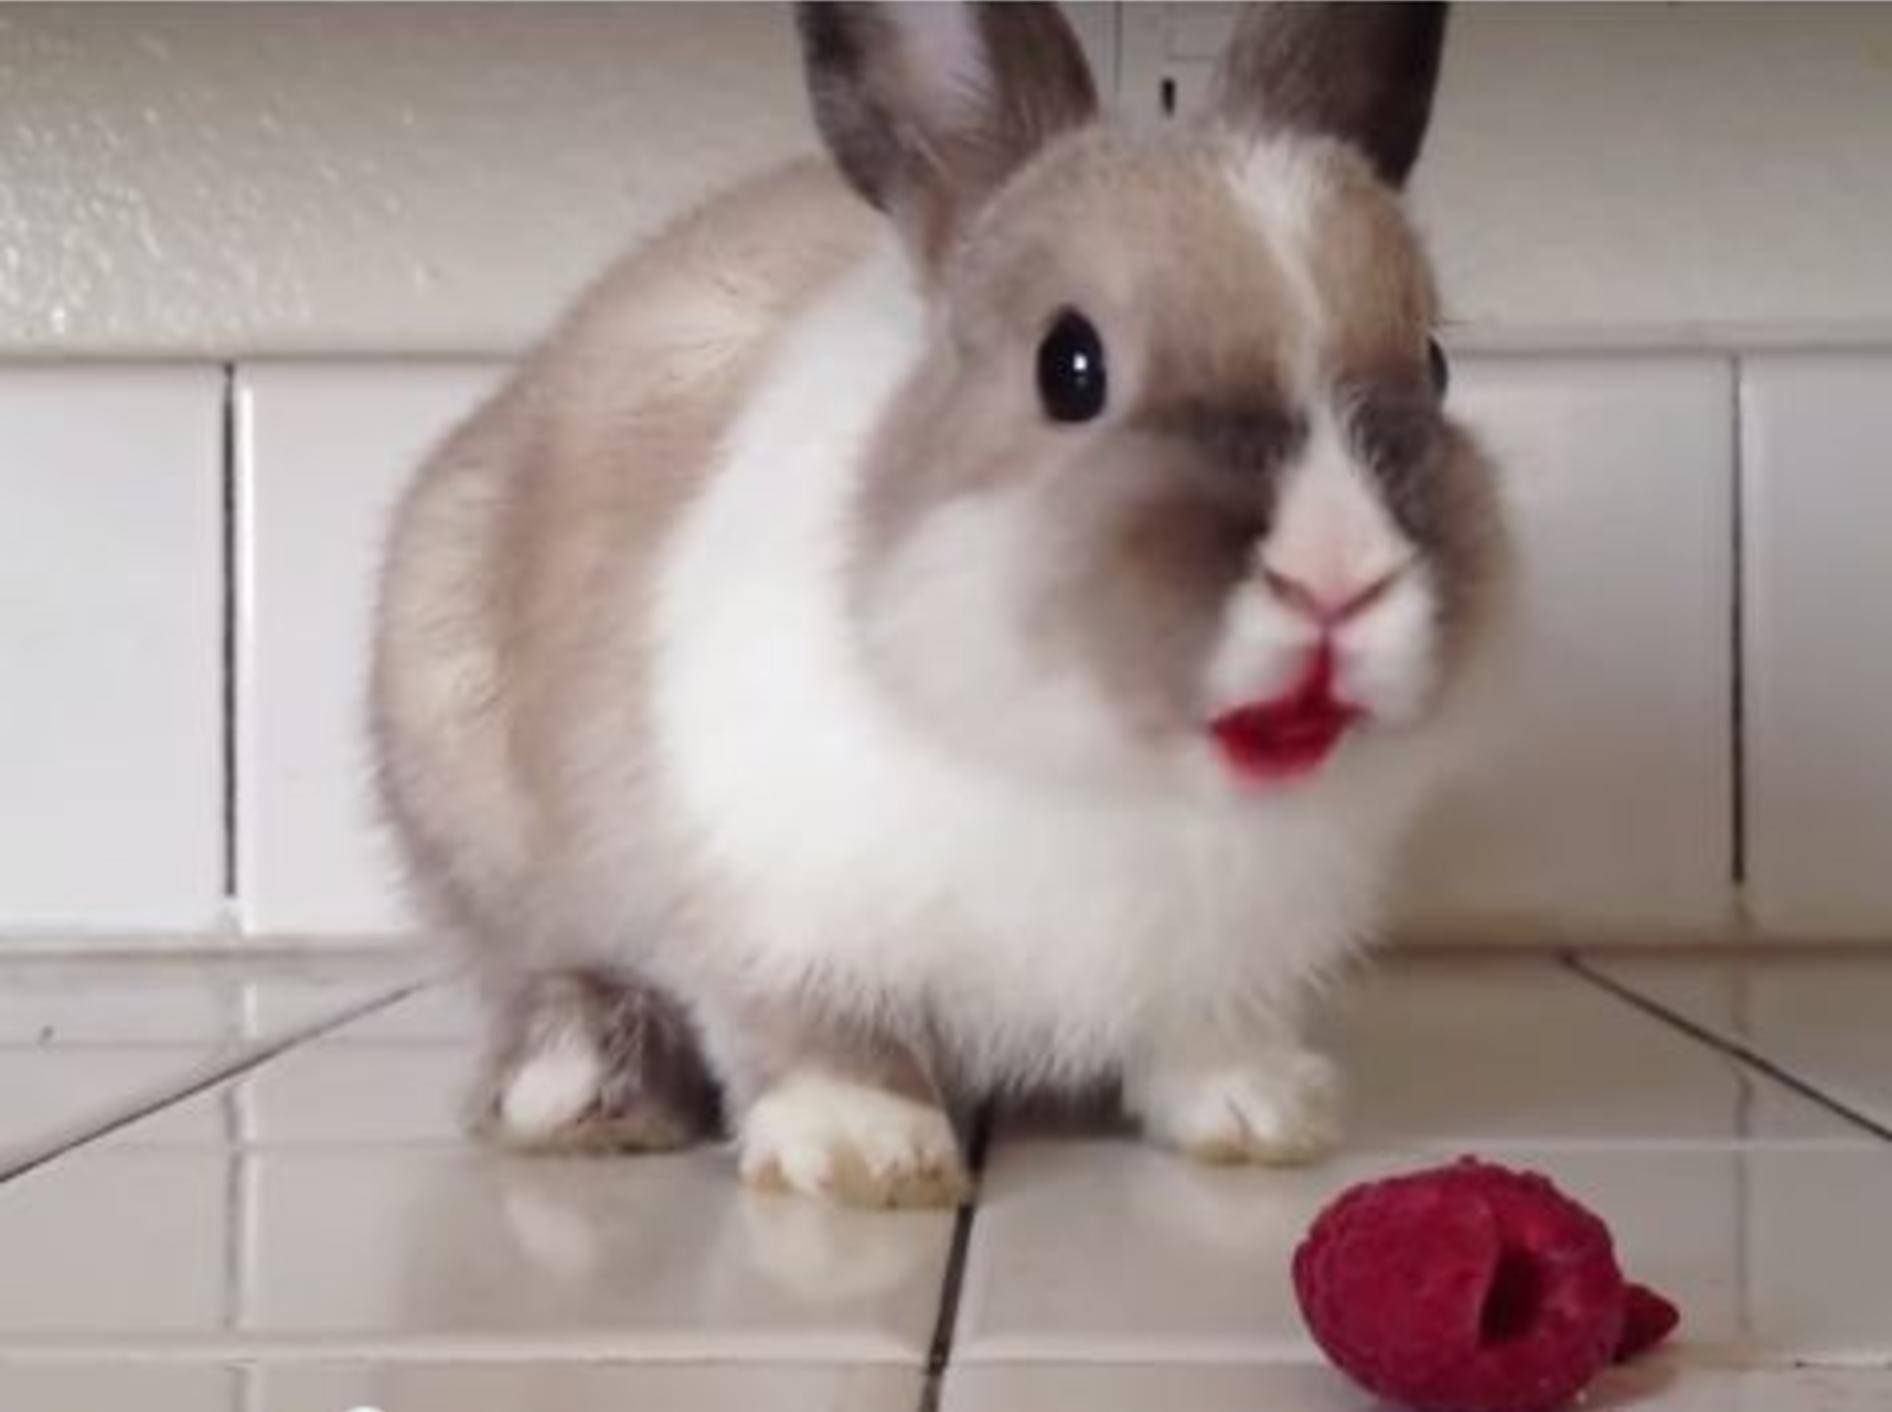 Süßes Kaninchen: "Oh lecker, Himbeeren!!!" – Bild: Youtube / 929 The Bull TV